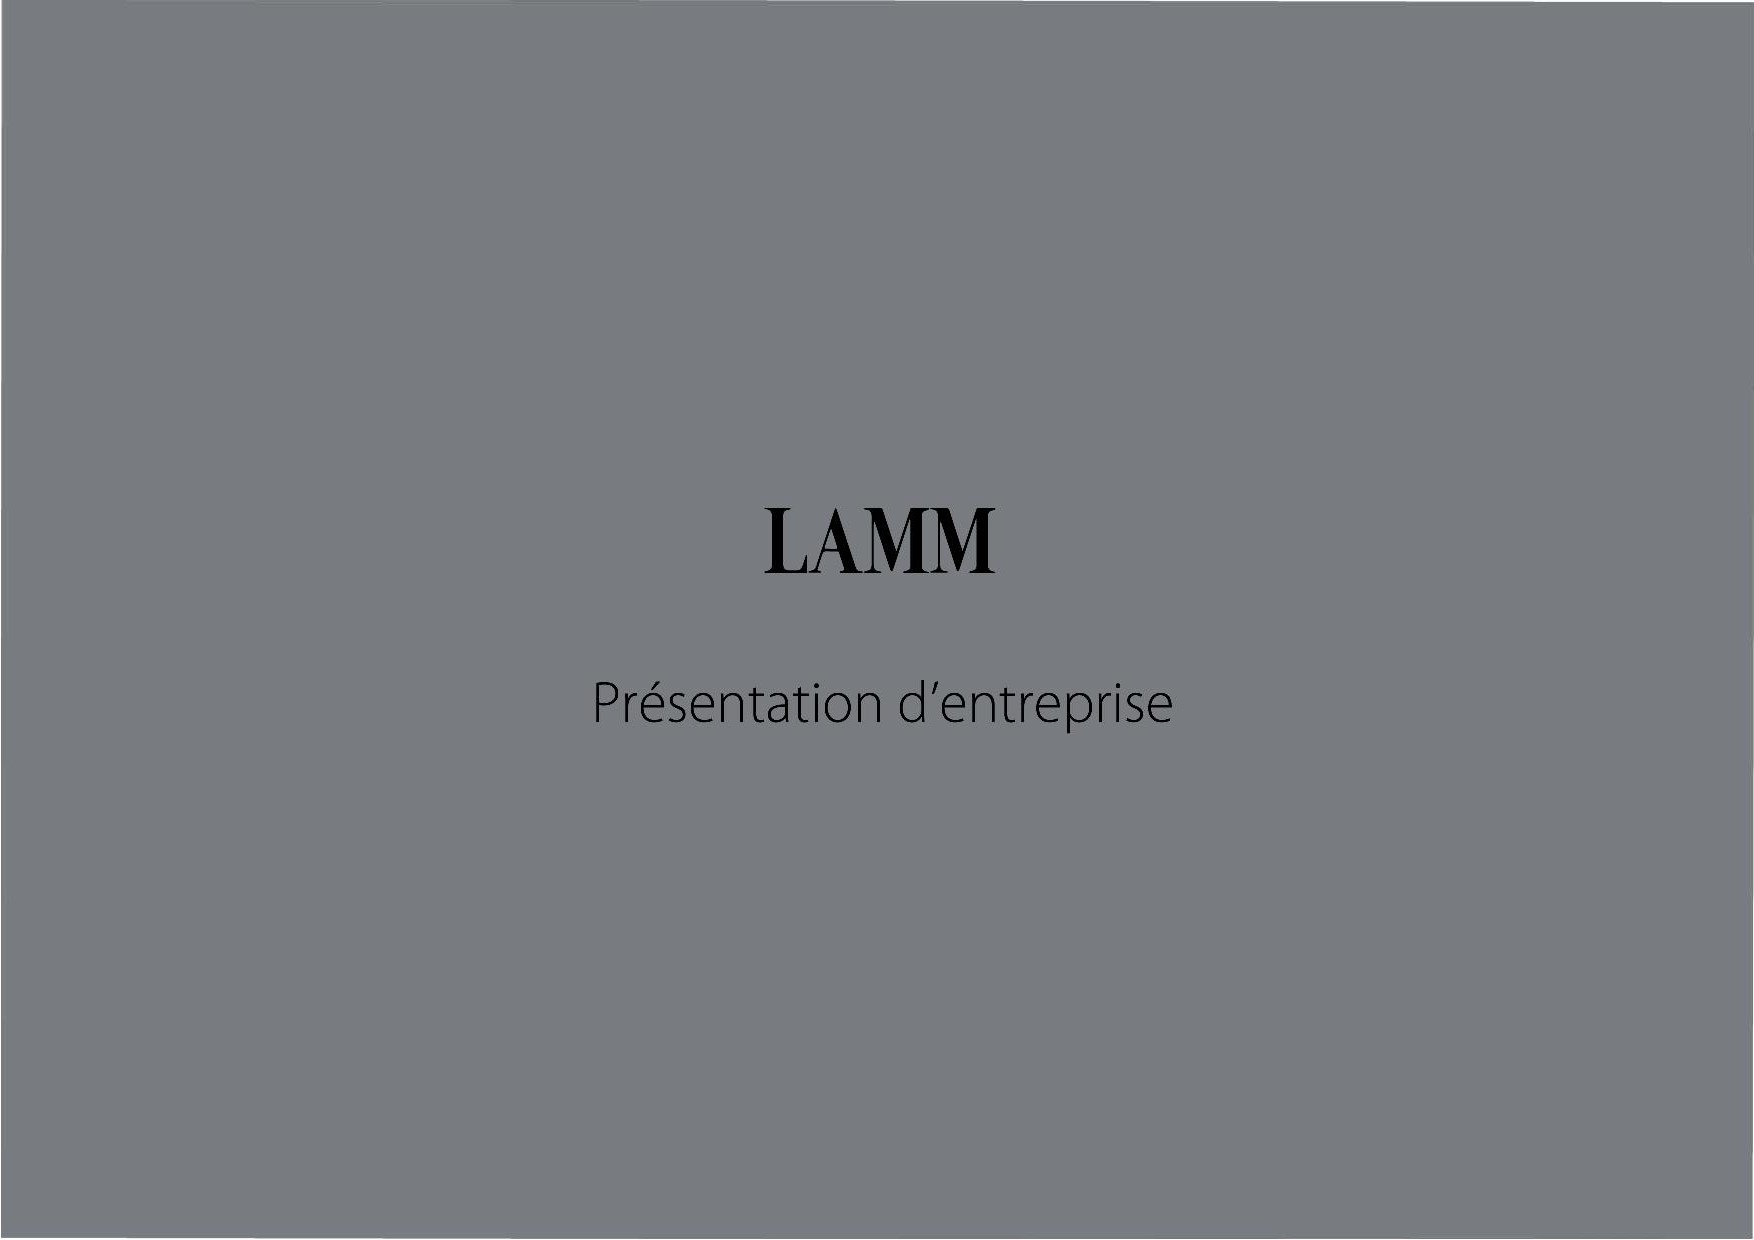 Lamm video production